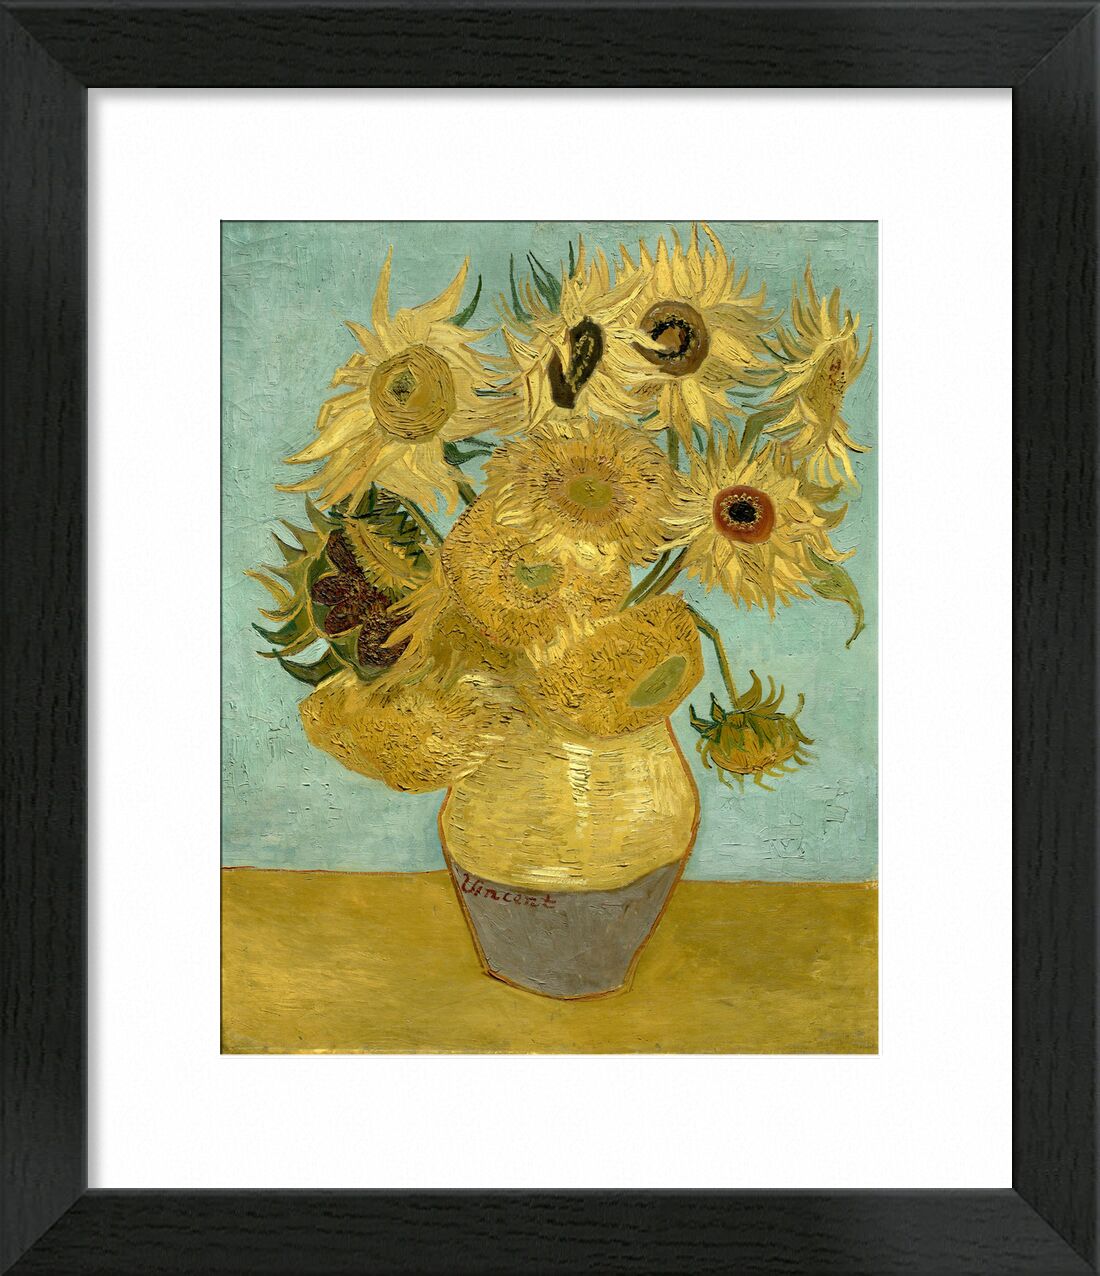 Sunflowers - Van Gogh desde Bellas artes, Prodi Art, girasol, pintura, Van gogh